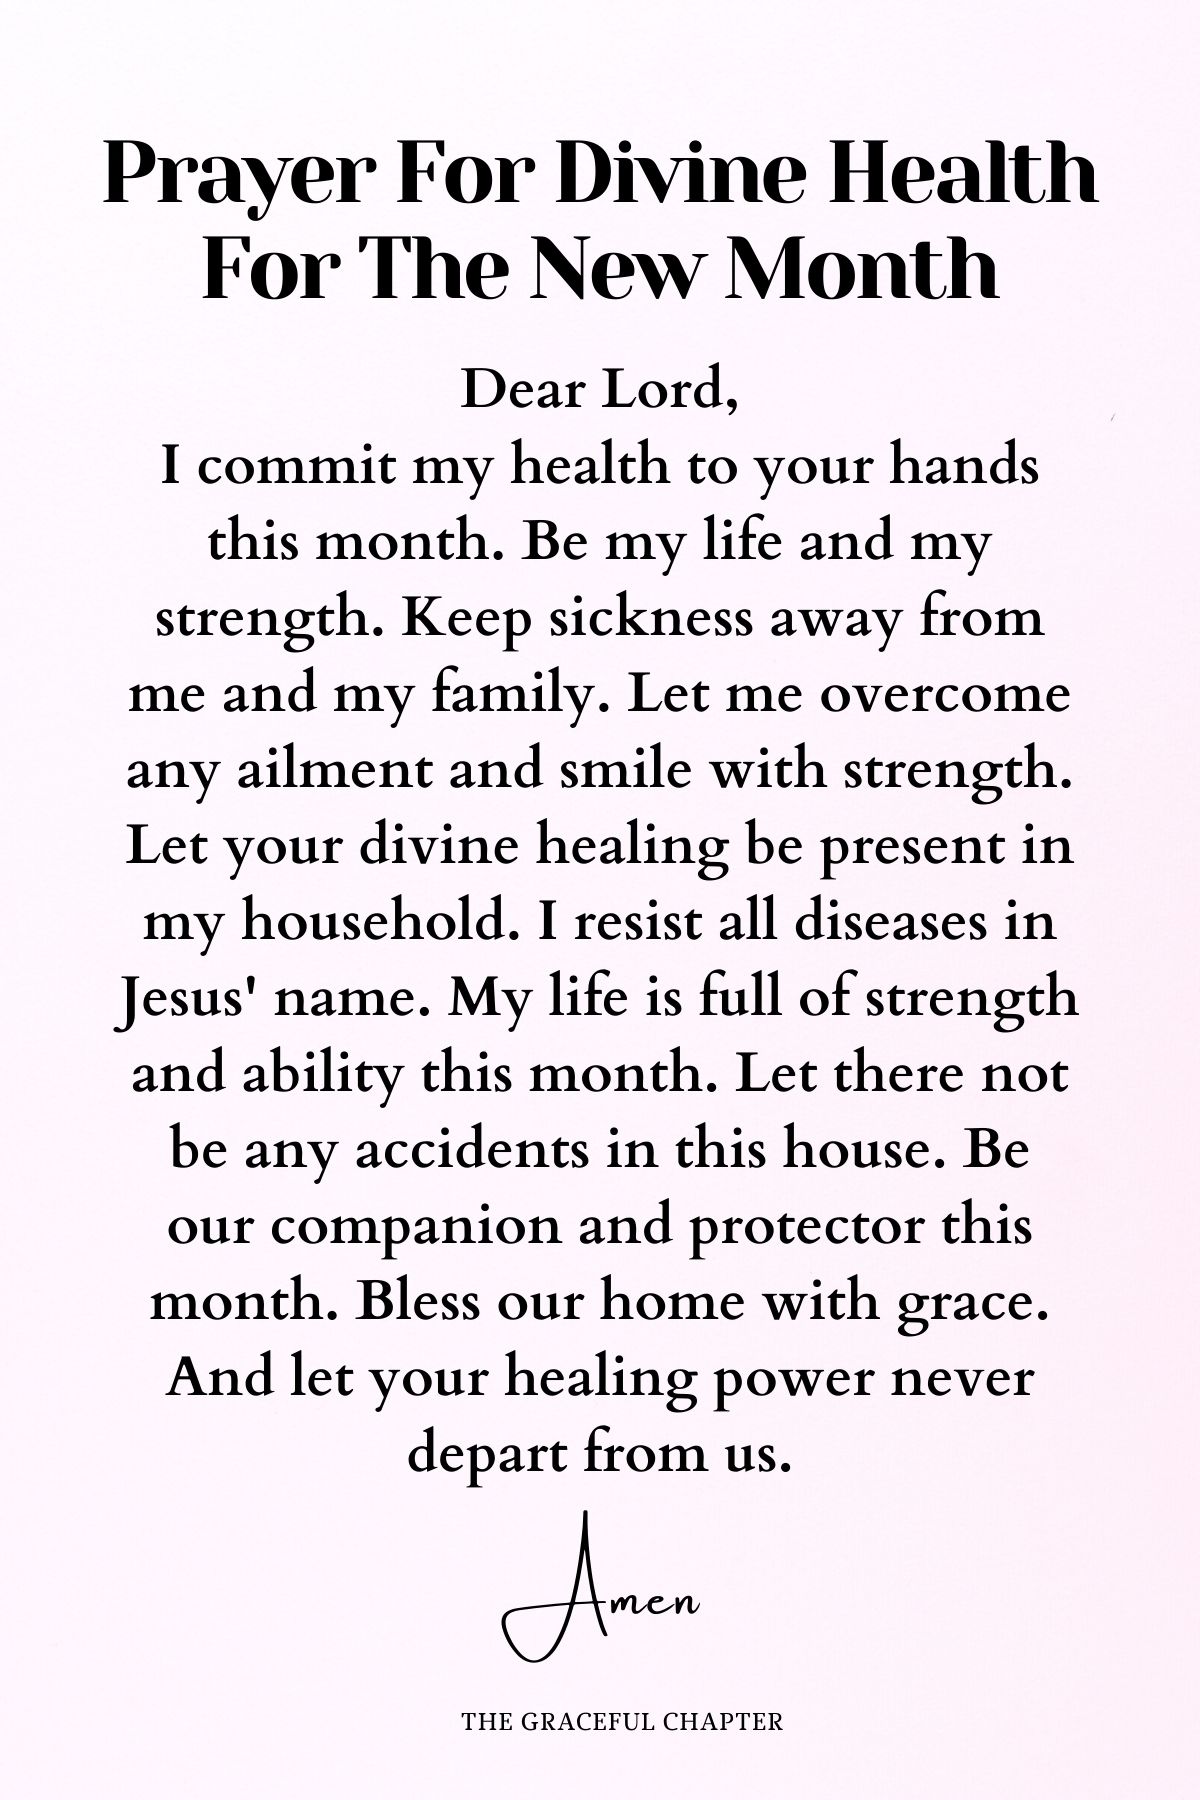 Prayer for divine health